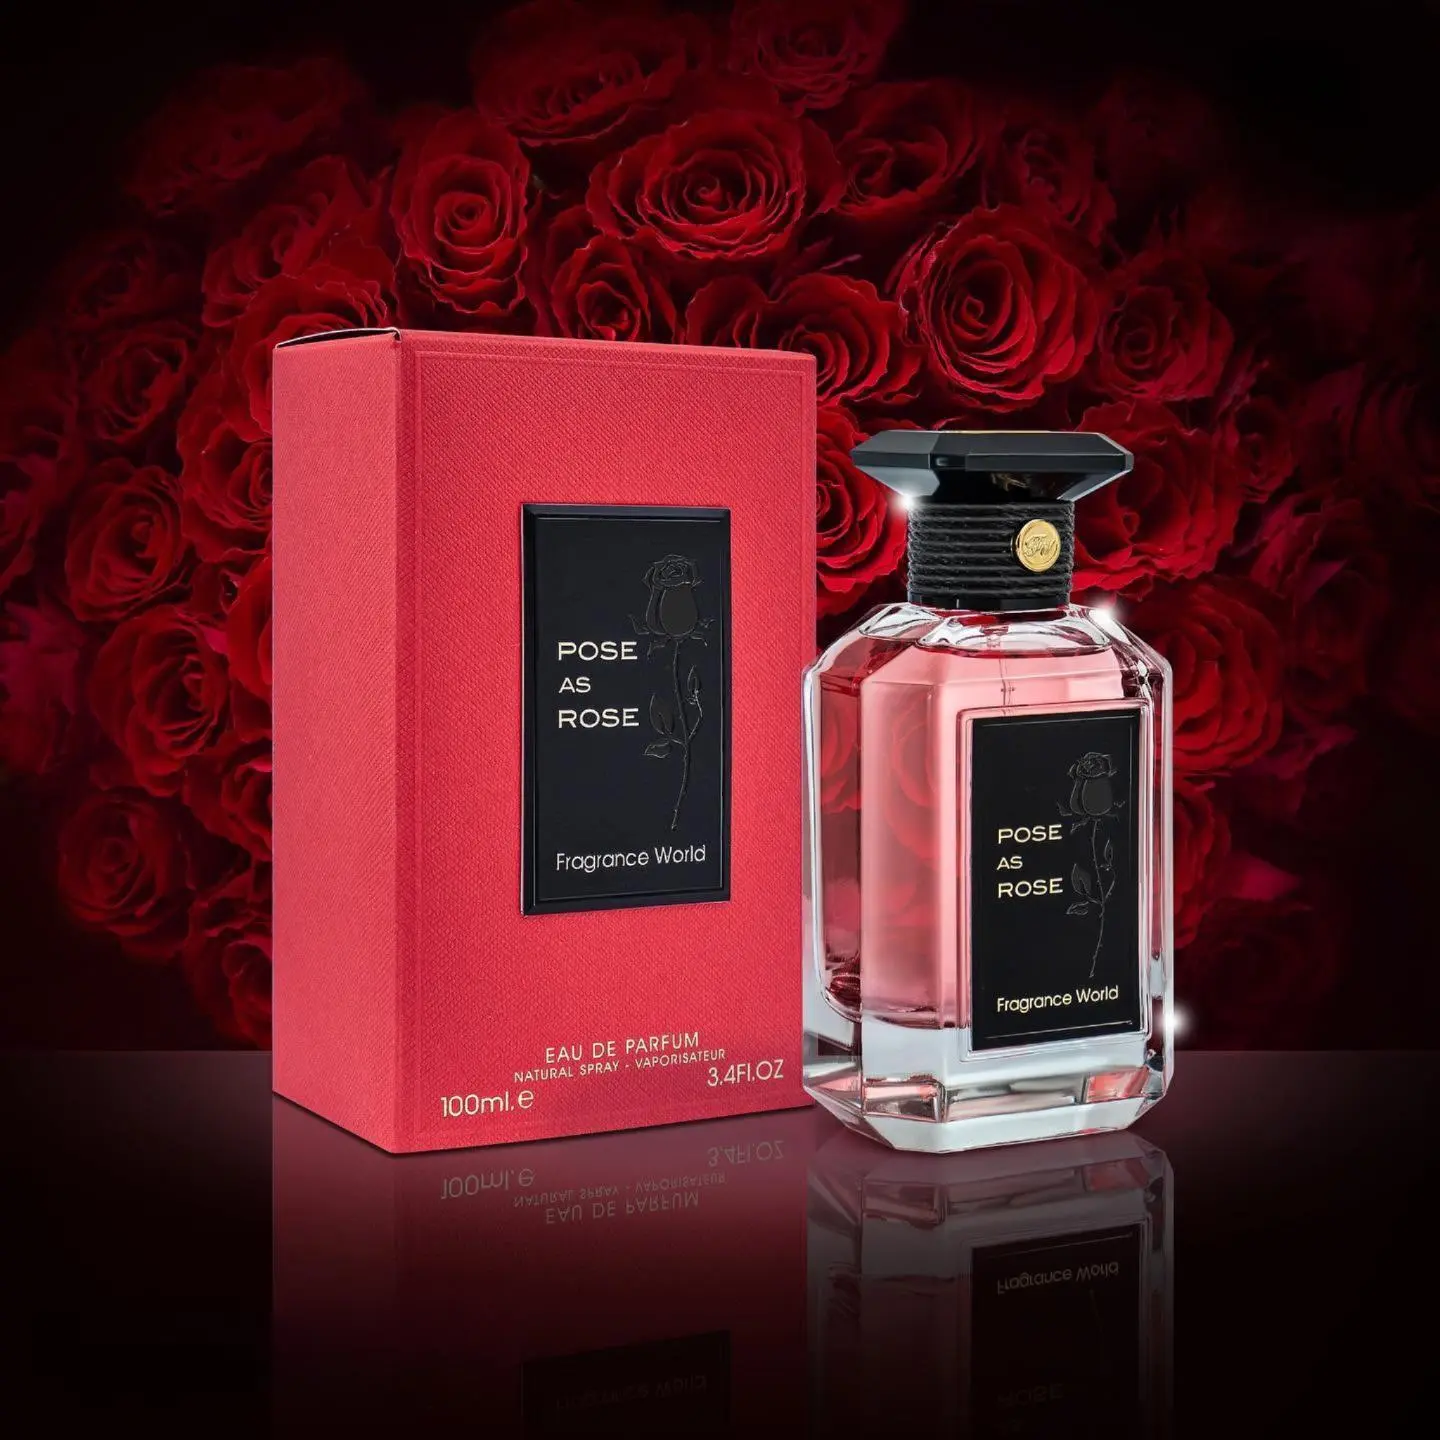 Pose As Rose Perfume / Eau De Parfum By Fragrance World